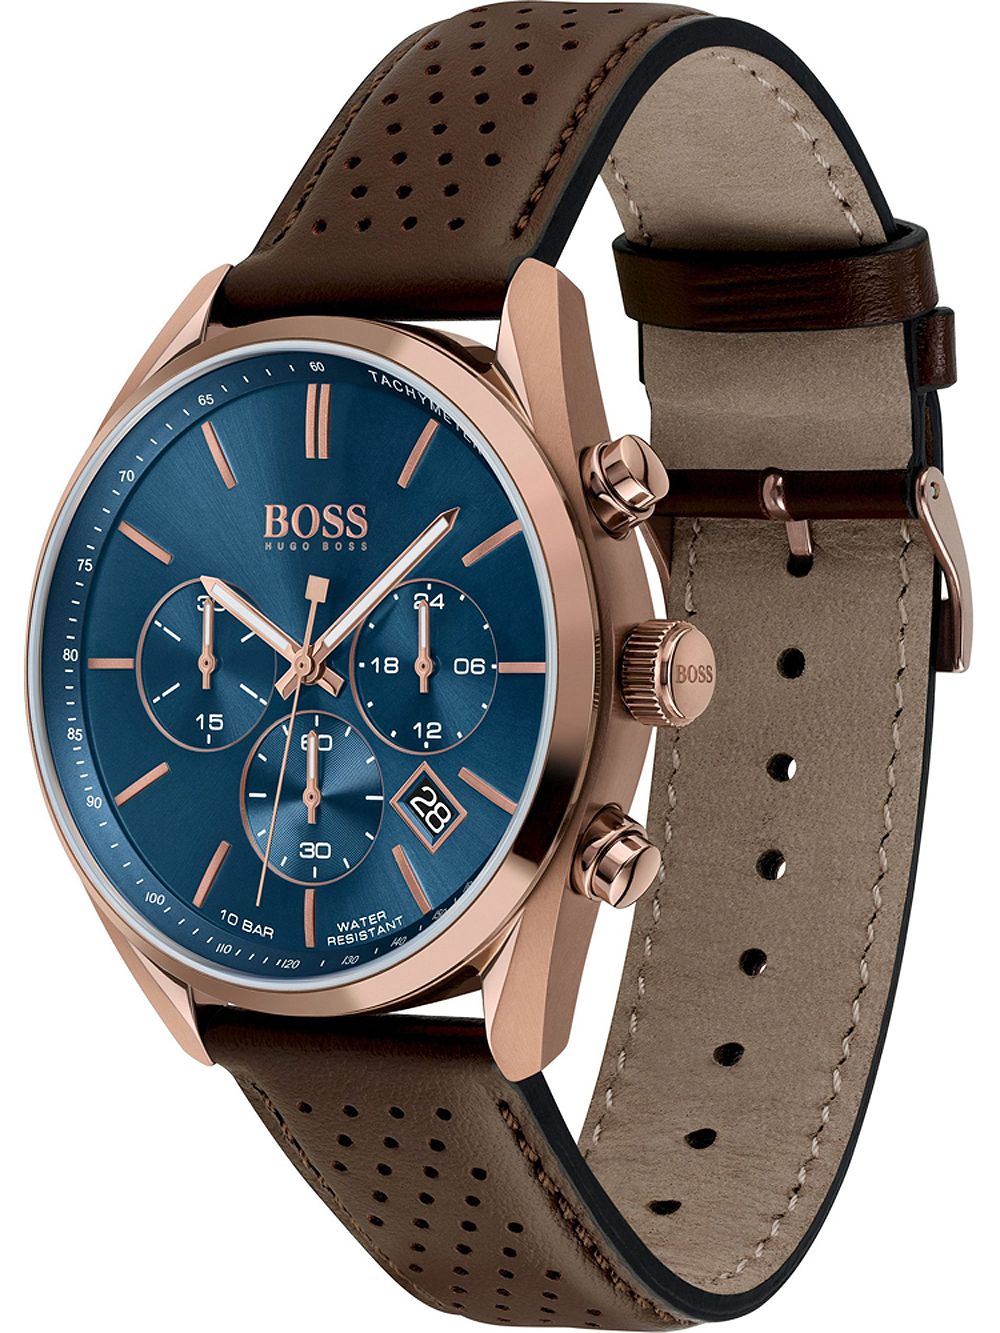 Hugo Boss Men\'s 1513817 Champion chrono 44mm – Canada Timepiece 10ATM